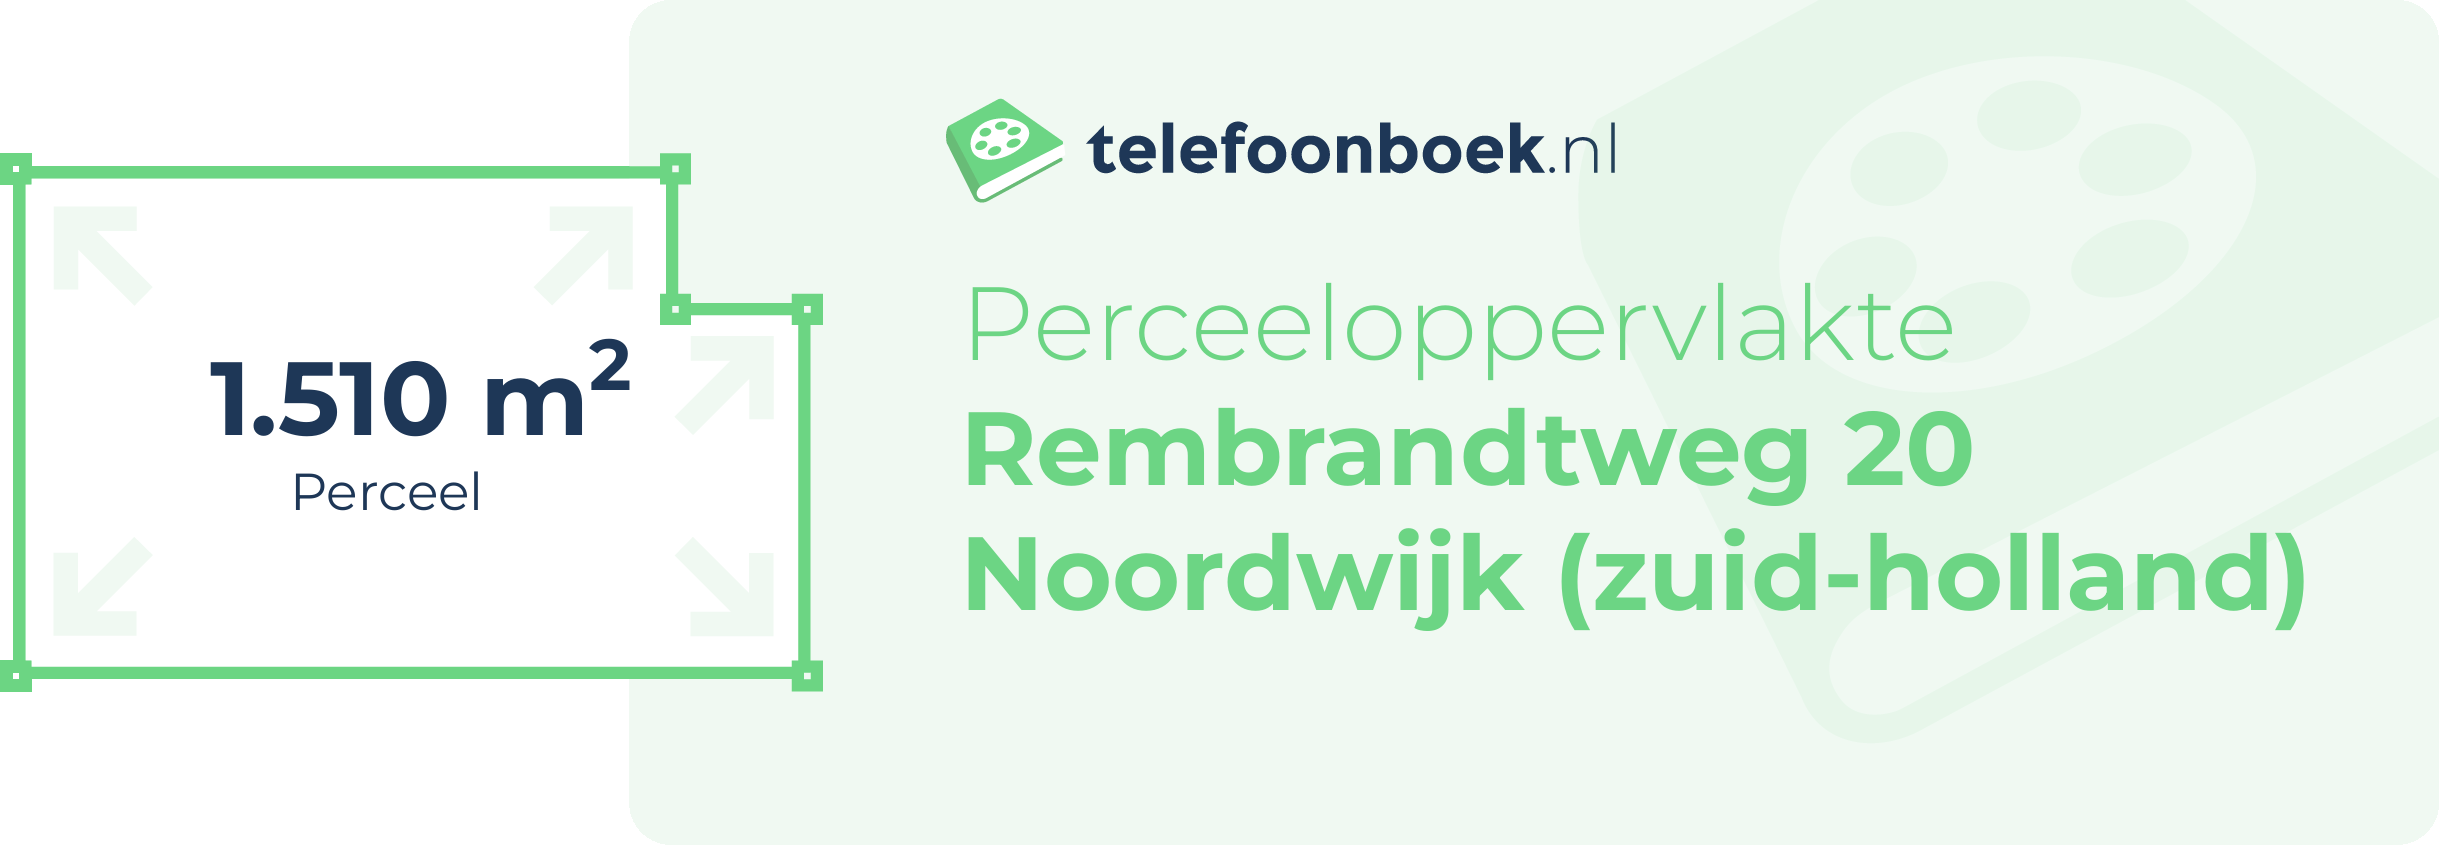 Perceeloppervlakte Rembrandtweg 20 Noordwijk (Zuid-Holland)